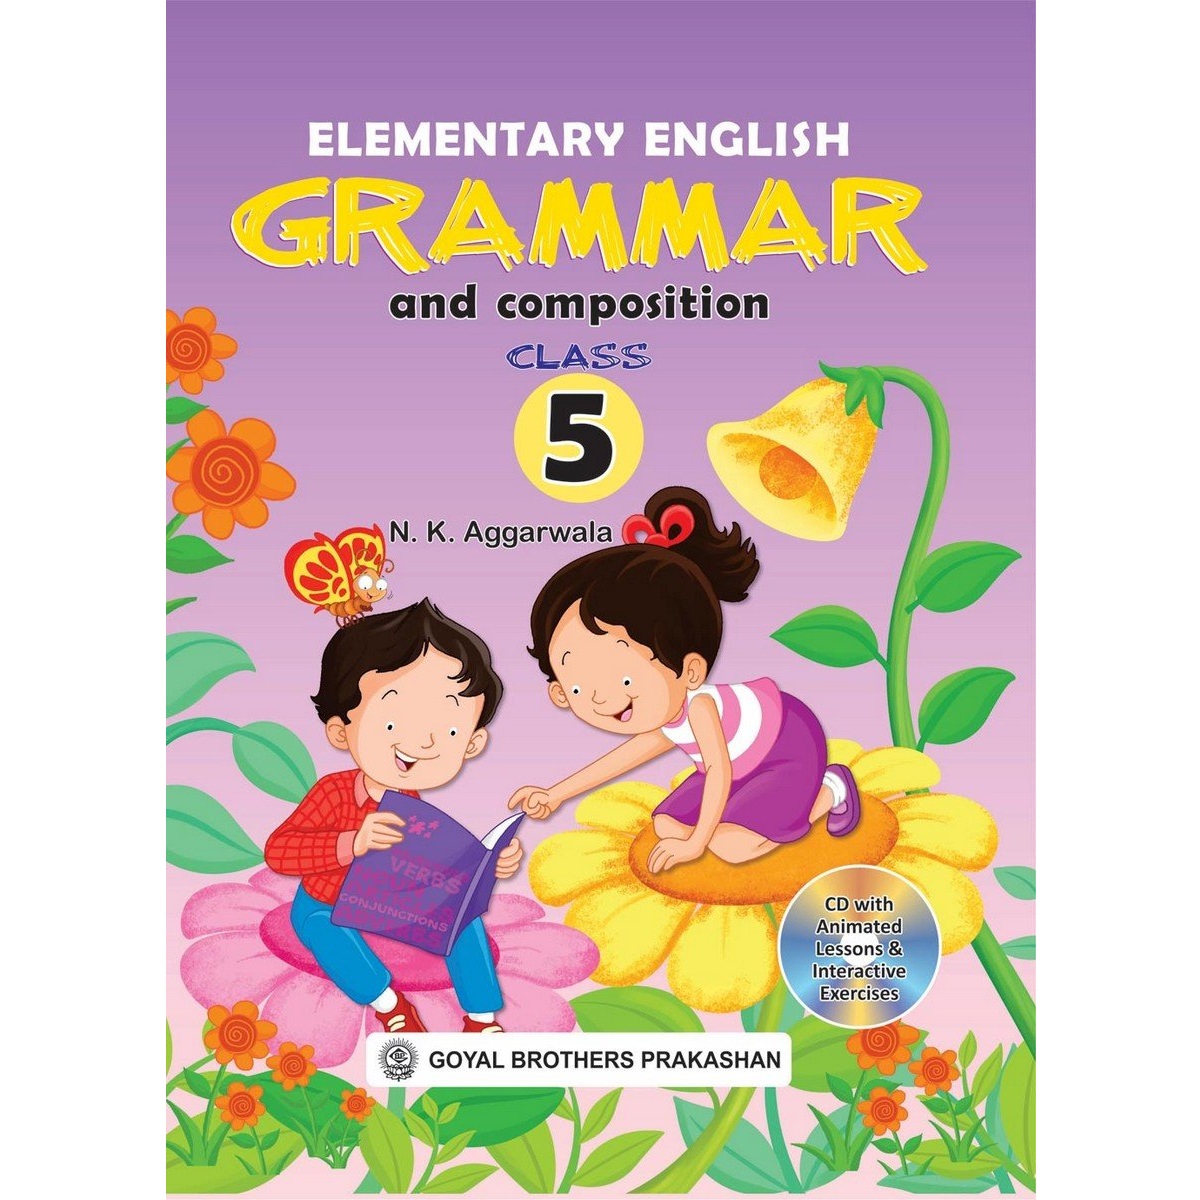 Elementary english. Английский Elementary. Elementary English Grammar. English for Kids Elementary book. English Grammar book Elementary.